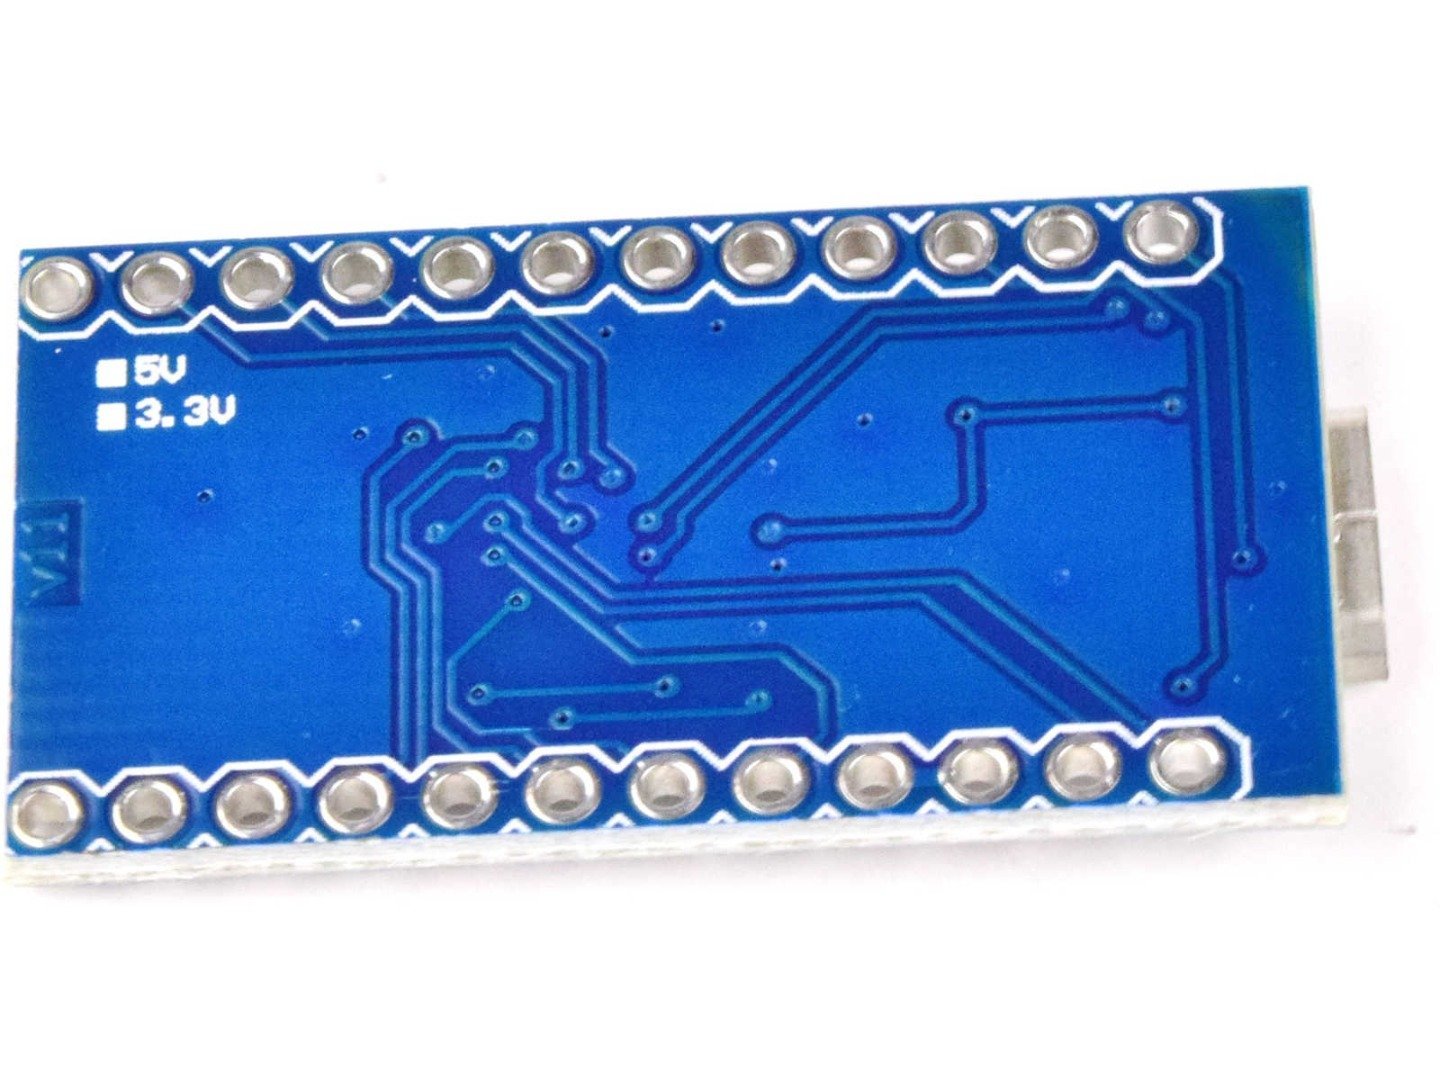 Mini SS Micro ATMEGA32U4 Module Board Compatible for Arduino Pro Micro BadUSB